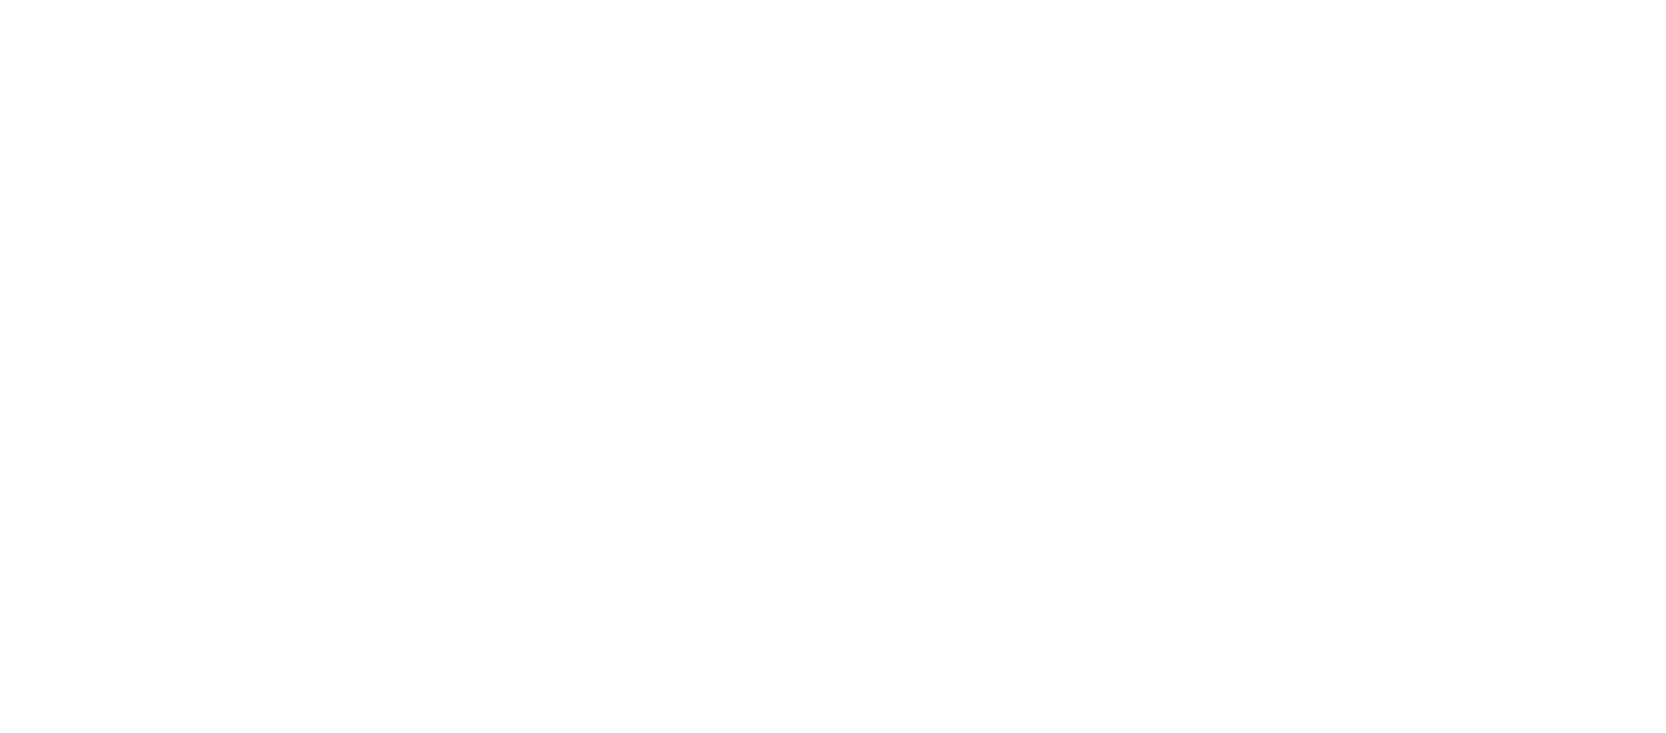 Orpea logo for dark backgrounds (transparent PNG)